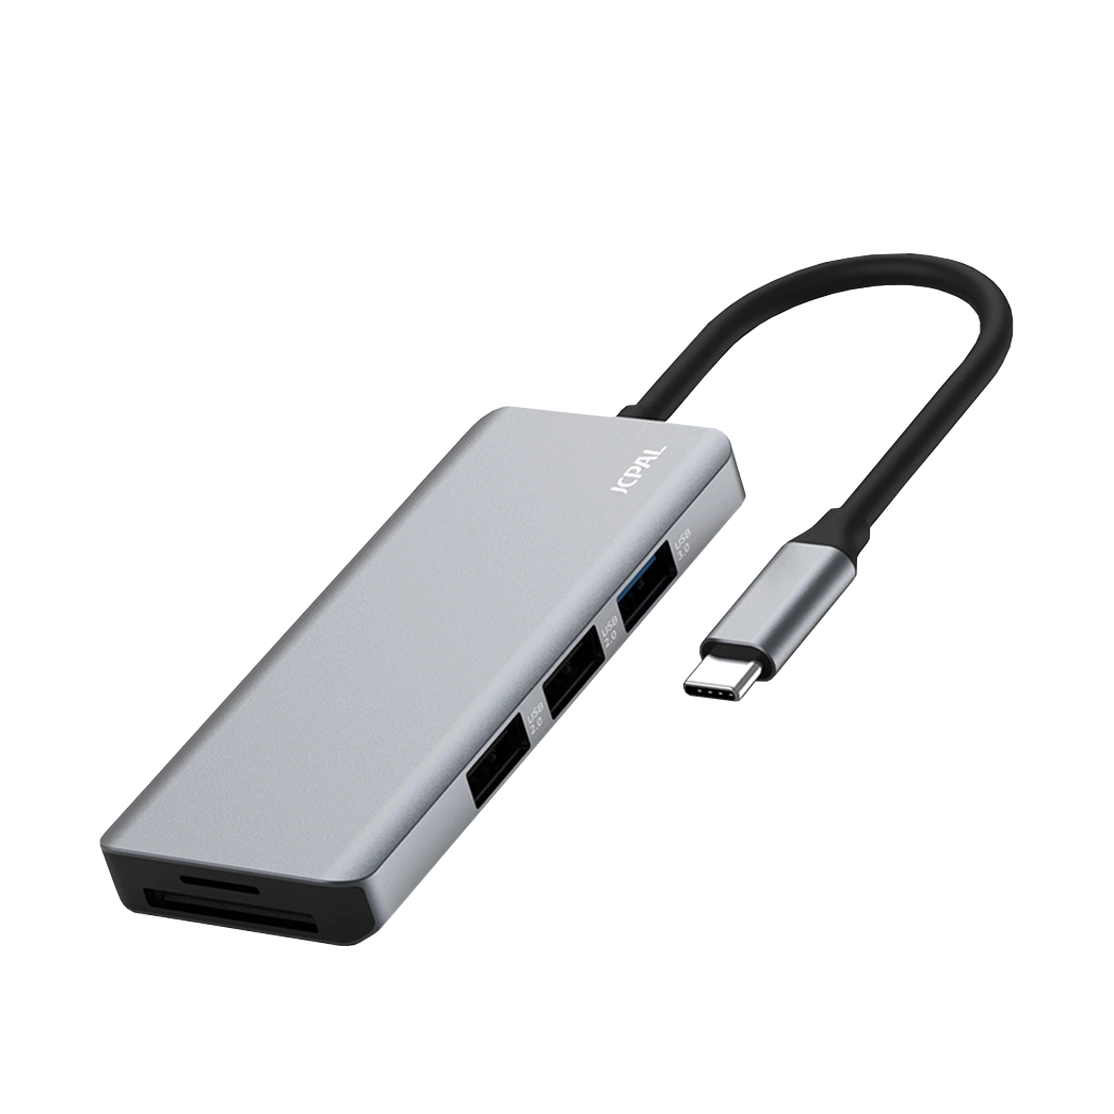 Jcpal Linx USB-C 7-Port Hub JCP6300